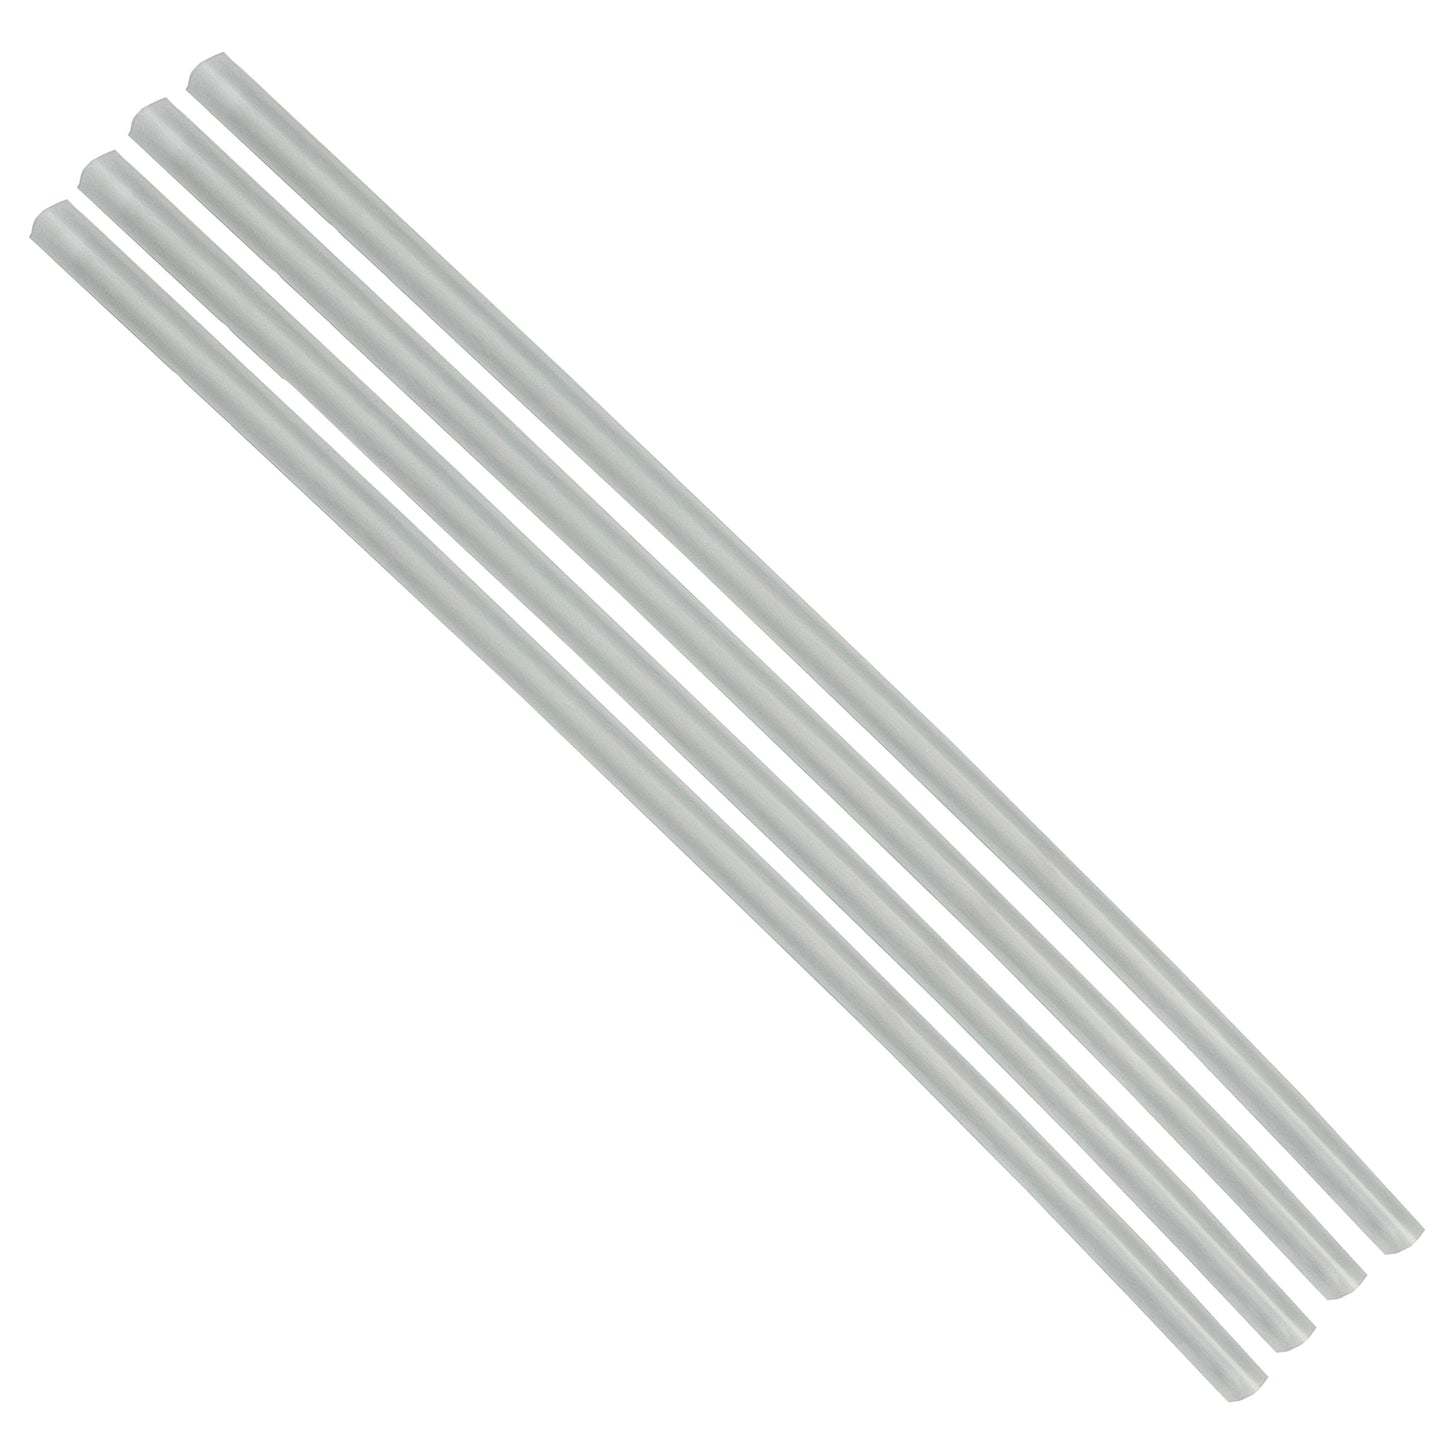 Flexible Thin Single Wall Non-Adhesive Heat Shrink Tubing 2:1 Clear 3/16" ID - 100' Ft Spool